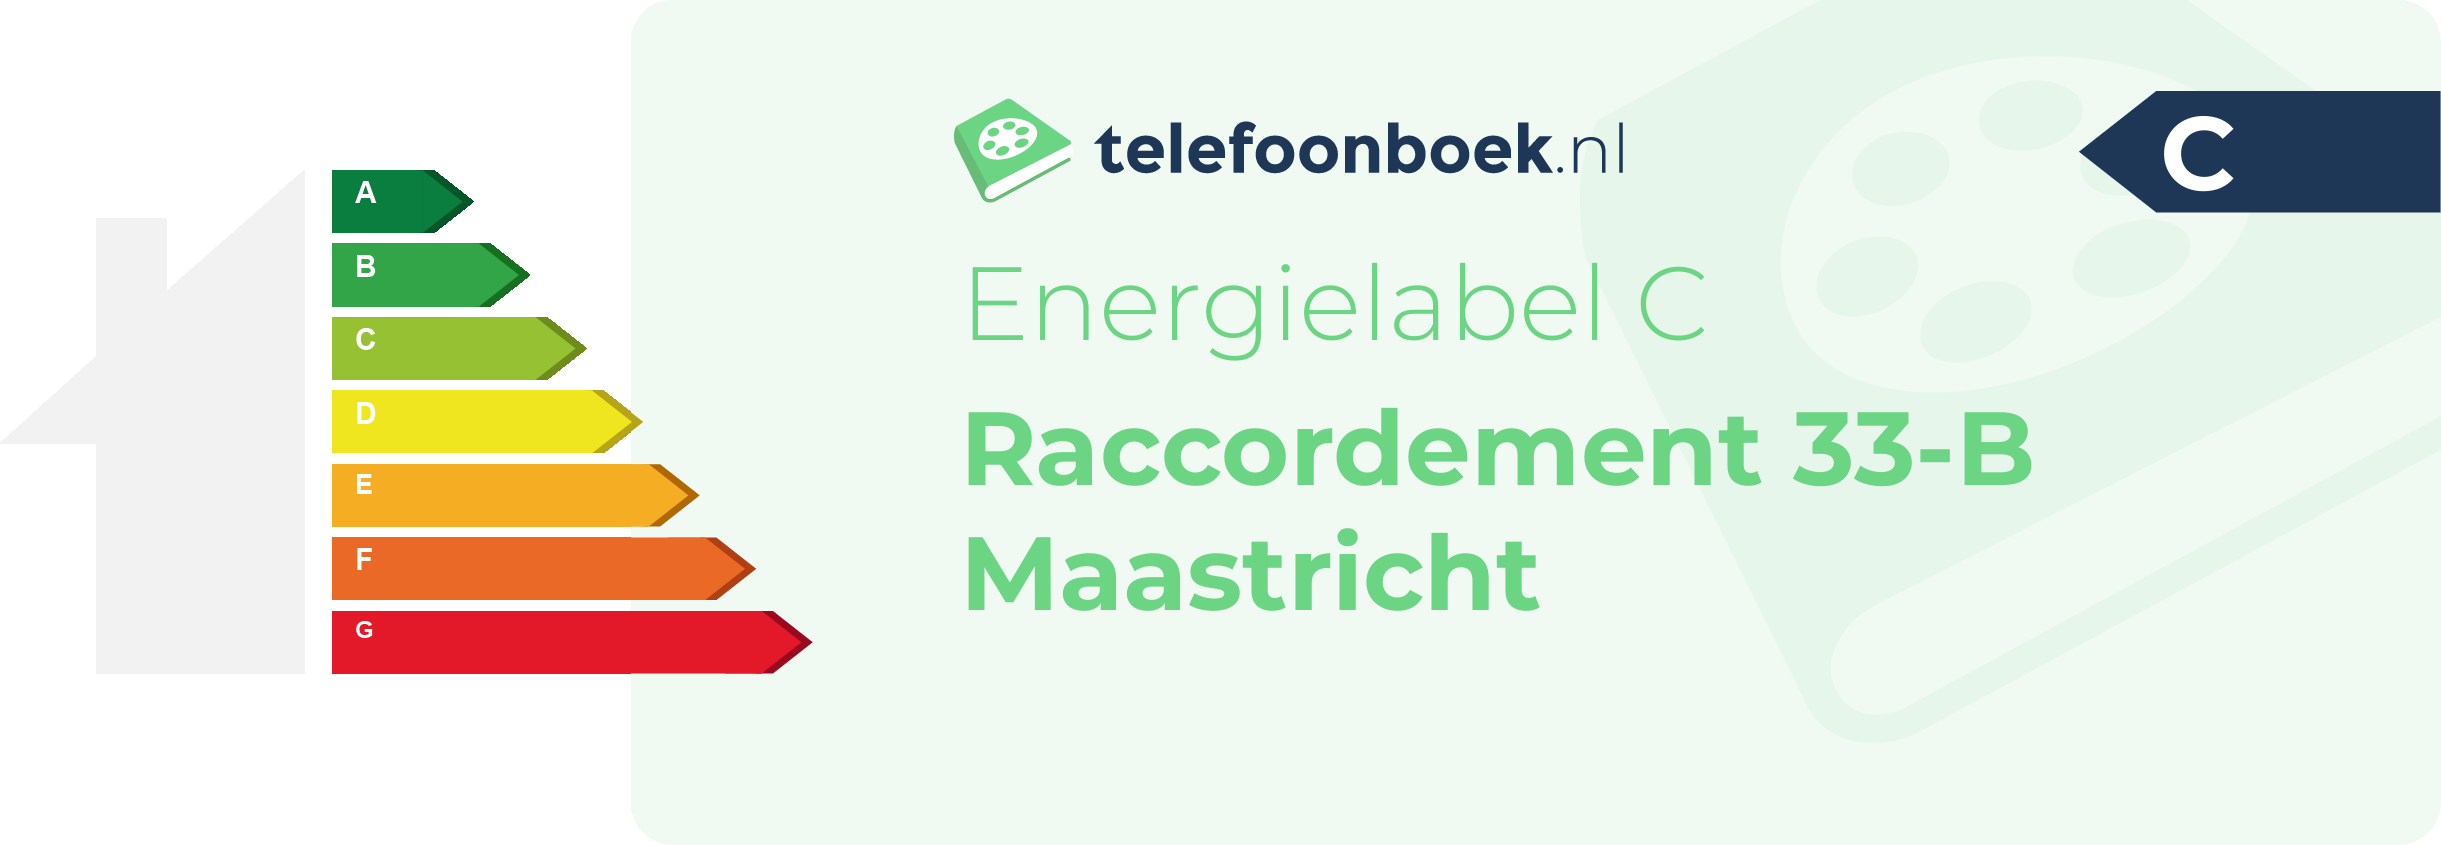 Energielabel Raccordement 33-B Maastricht